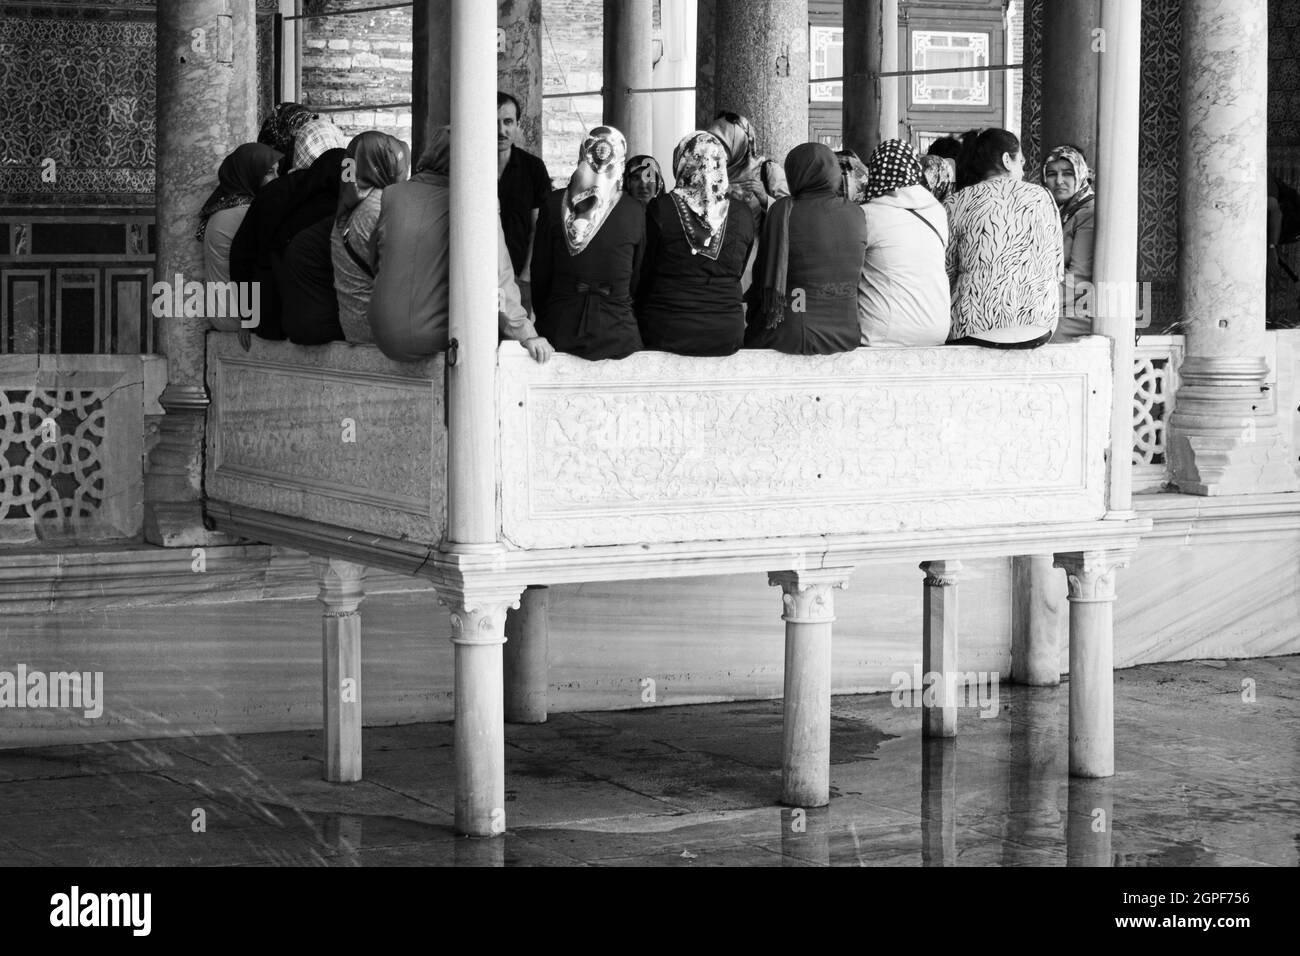 Istanbul, Turkey; May 25th 2013: Muslims visiting Topkapi palace. Stock Photo